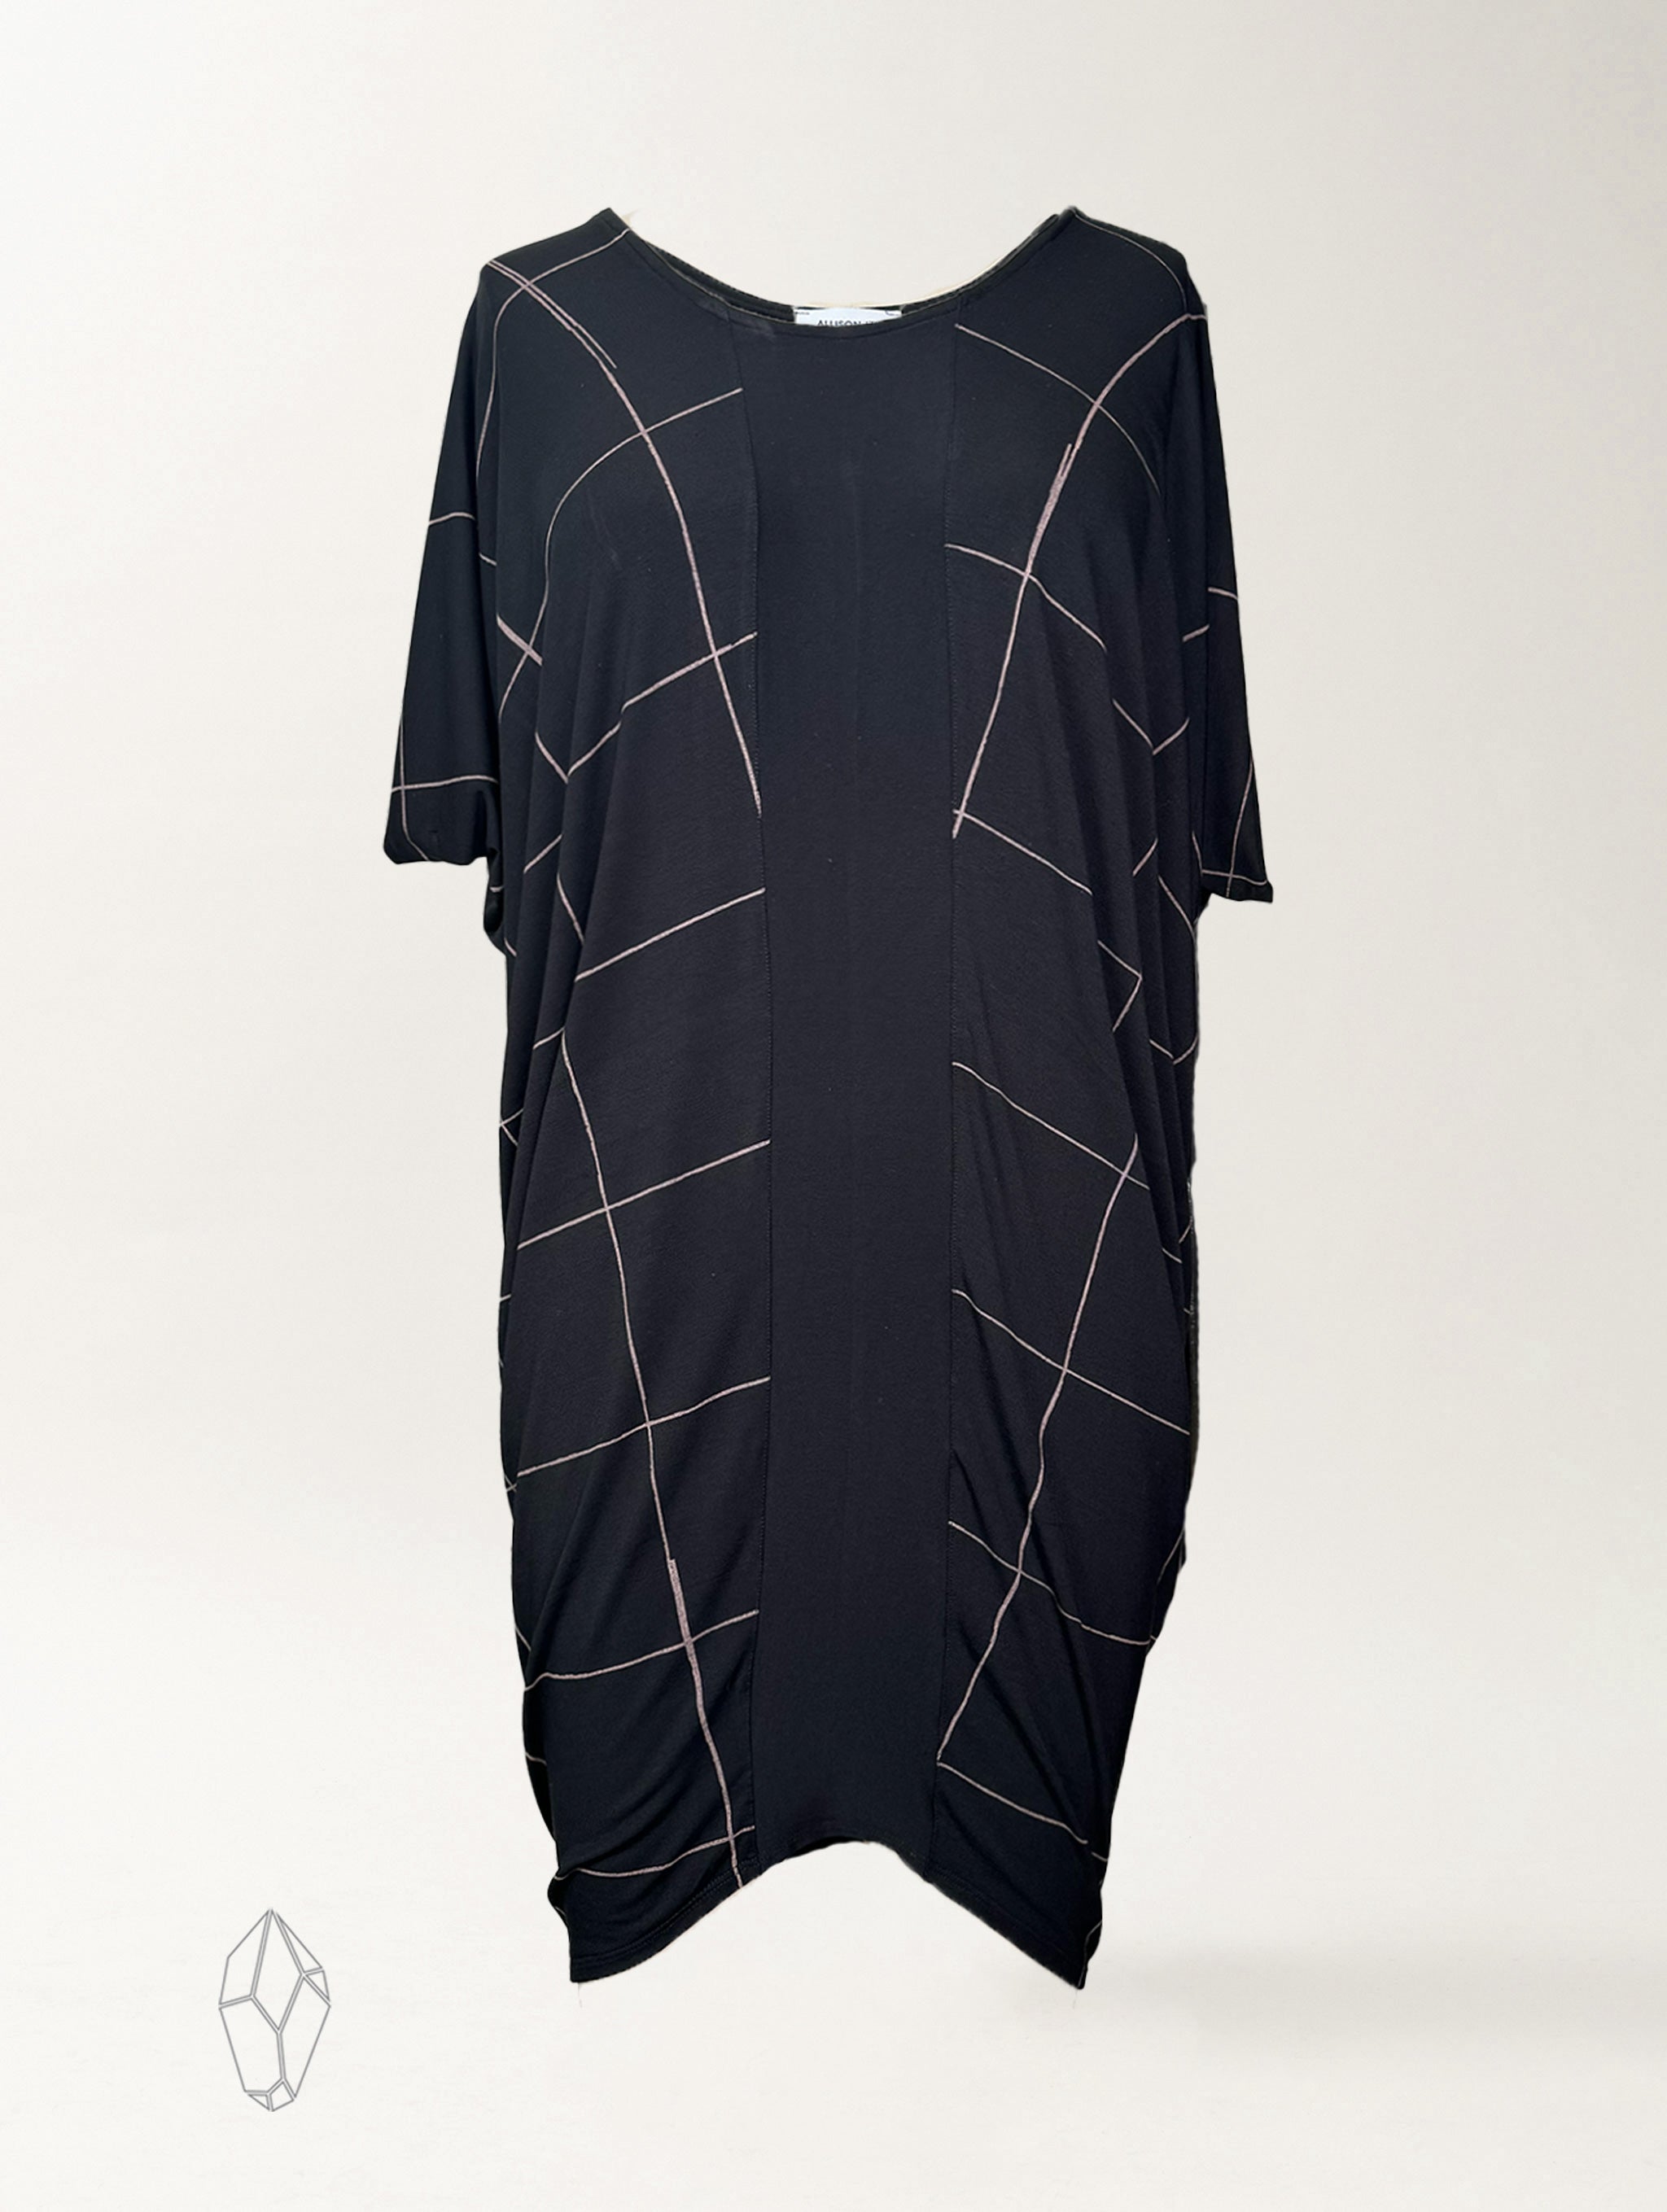 Holly Dress - Infinite Grid Rayon Jersey